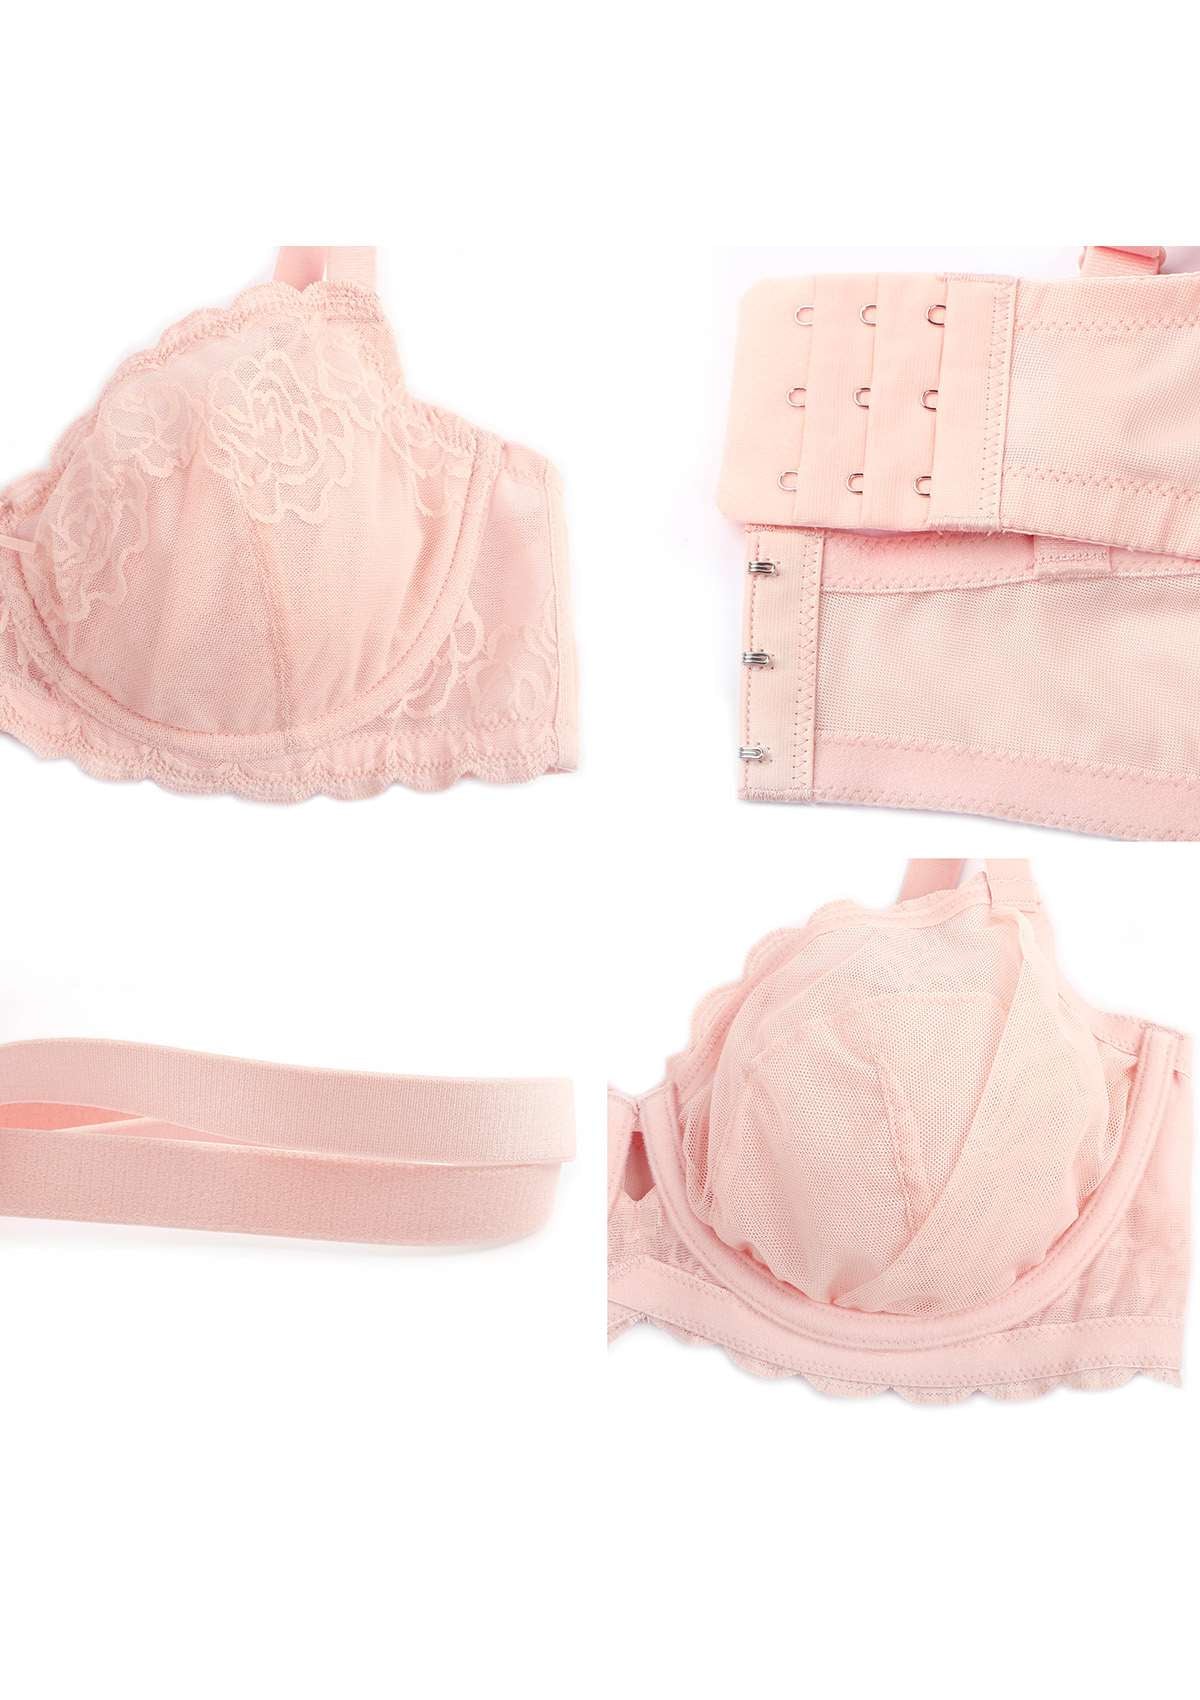 HSIA Rosa Bonica Sheer Lace Mesh Unlined Thin Comfy Woman Bra - Pink / 34 / DD/E